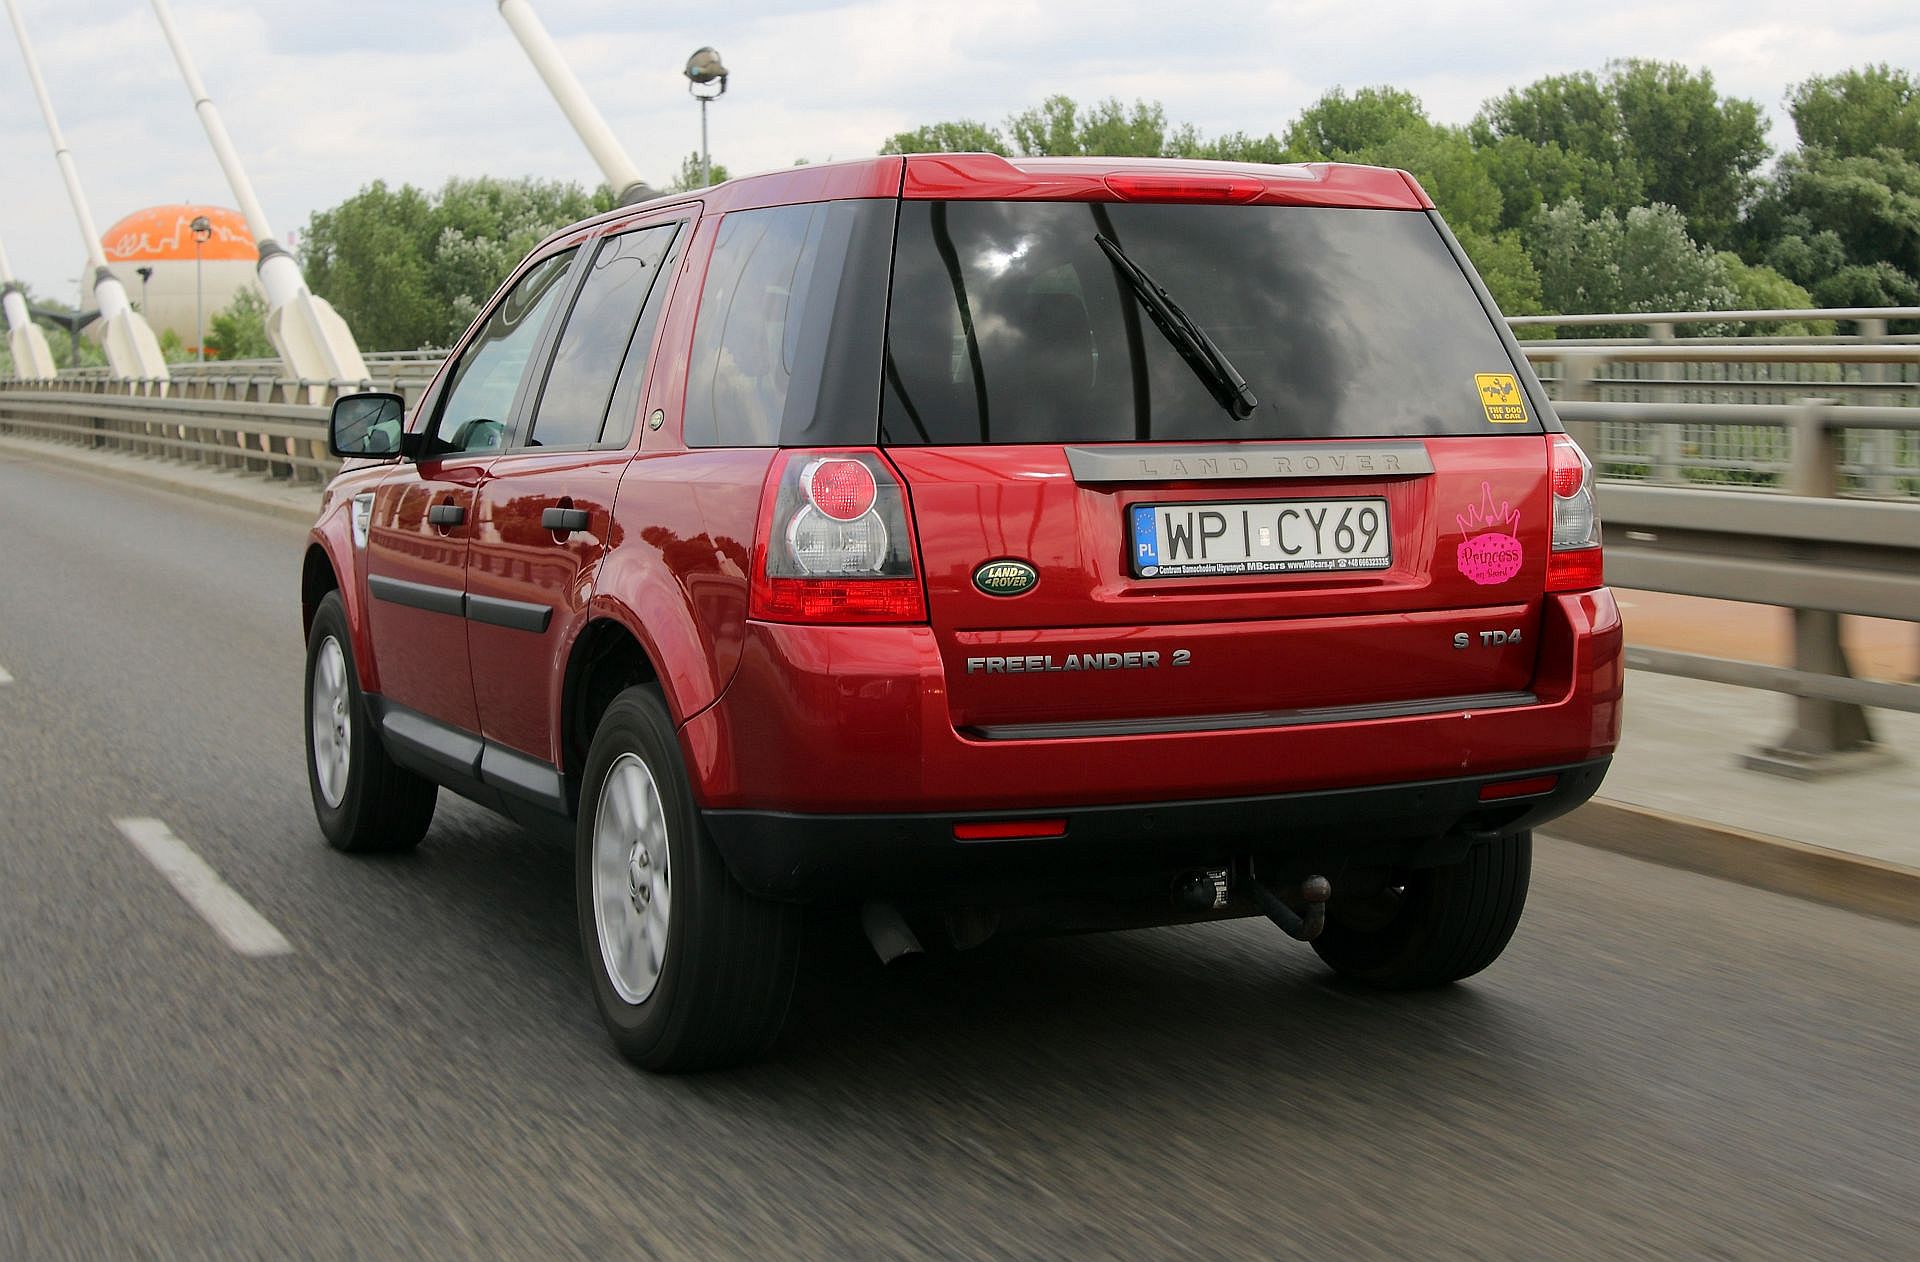 Używany Land Rover Freelander 2 (20062014) opinie, dane